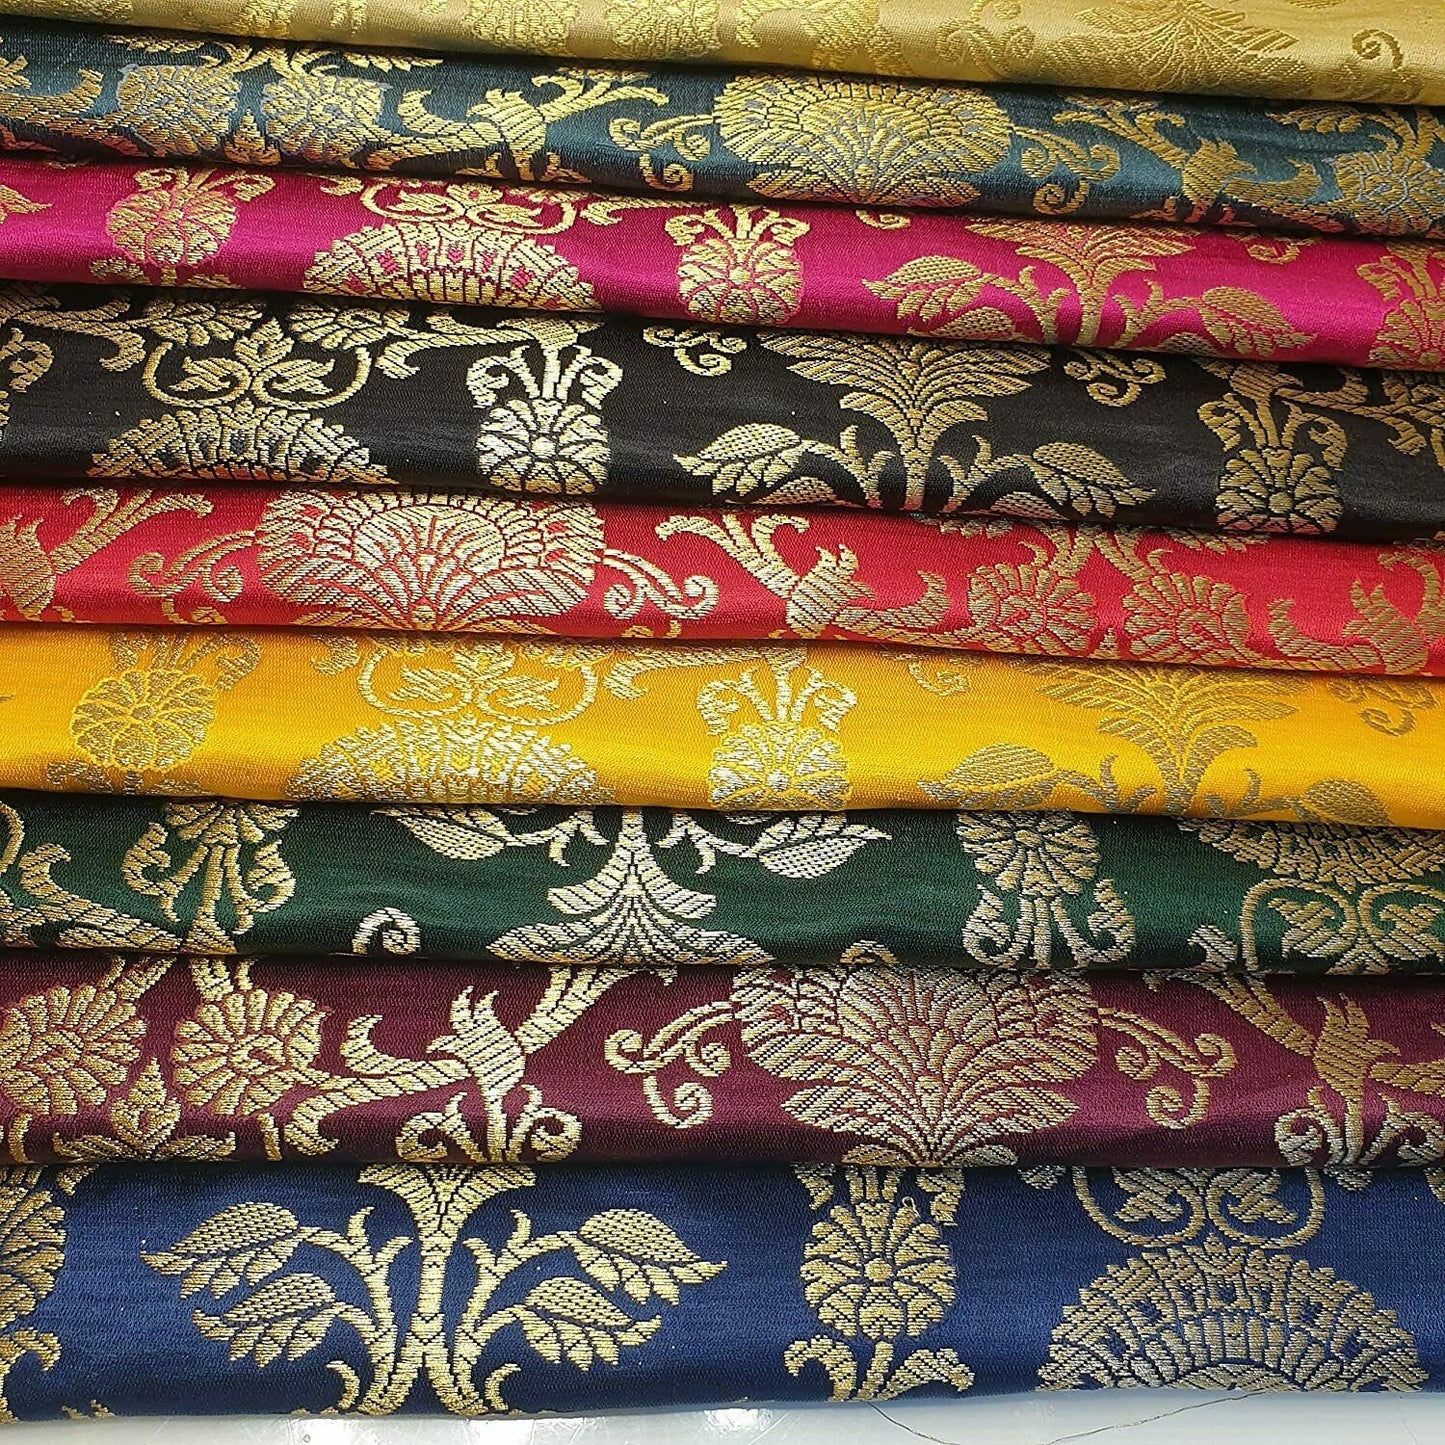 New Prints Ornamental Floral Gold Metallic Print Indian Banarasi Brocade Fabric (Wine)